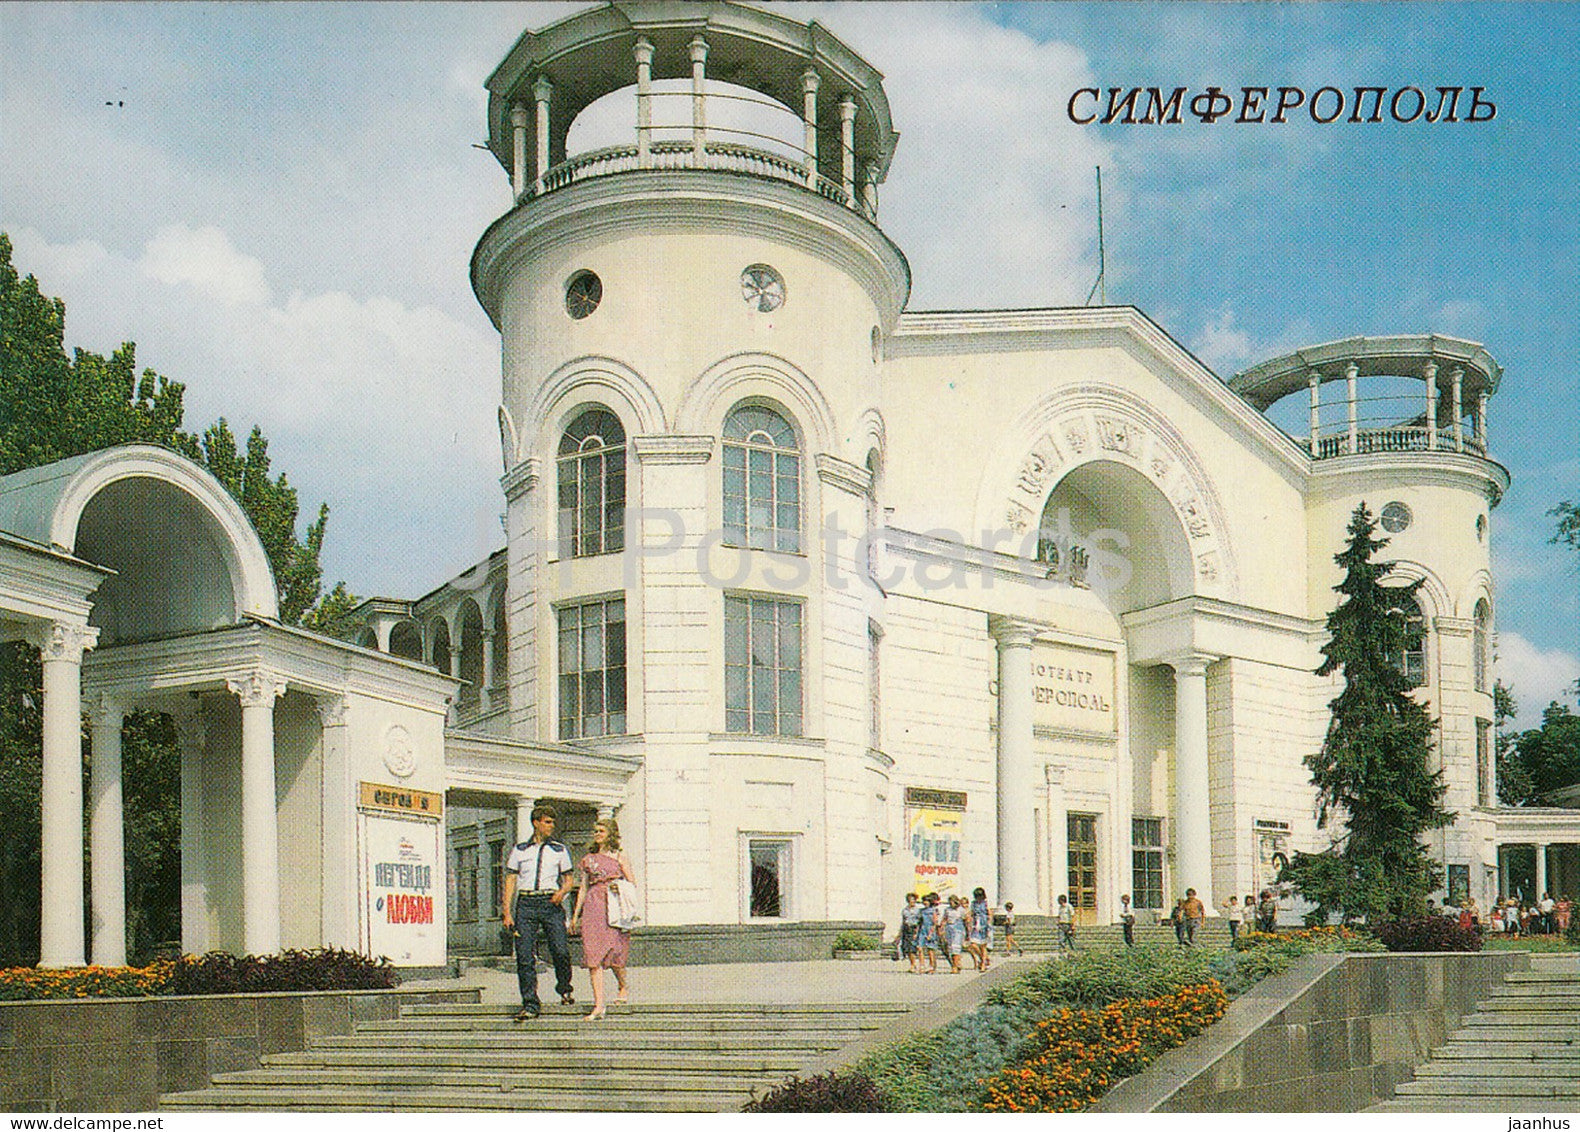 Simferopol - Cinema - 1988 - Ukraine USSR - unused - JH Postcards